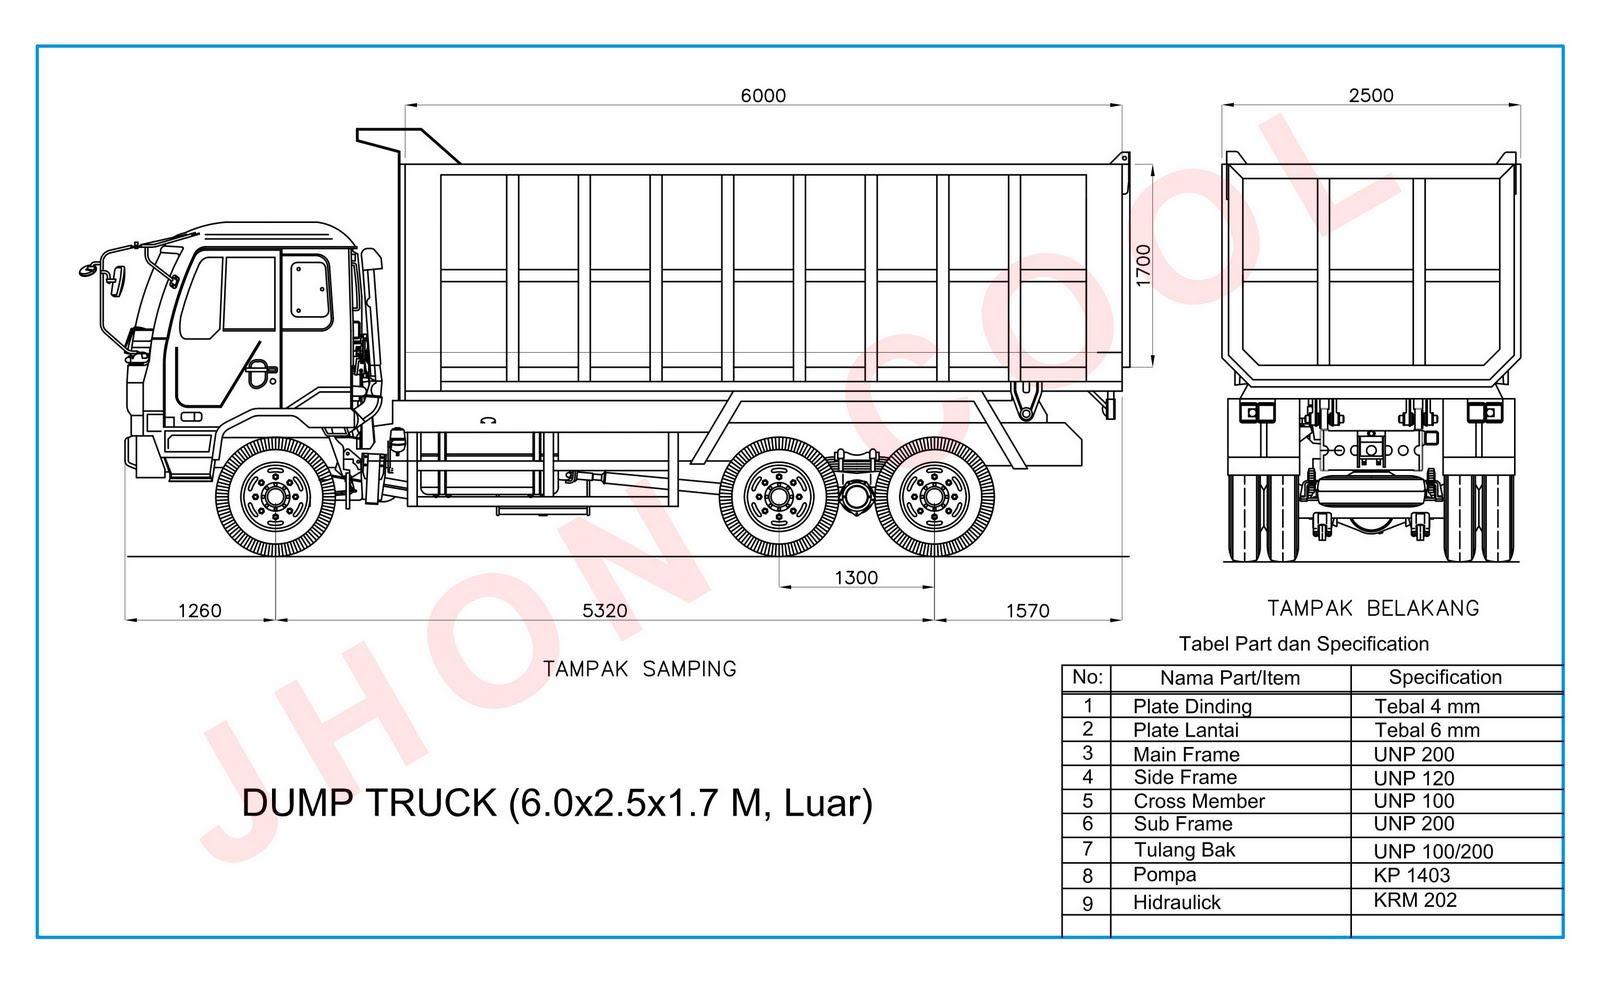 Maygunrifanto: Ukuran Dump Truck